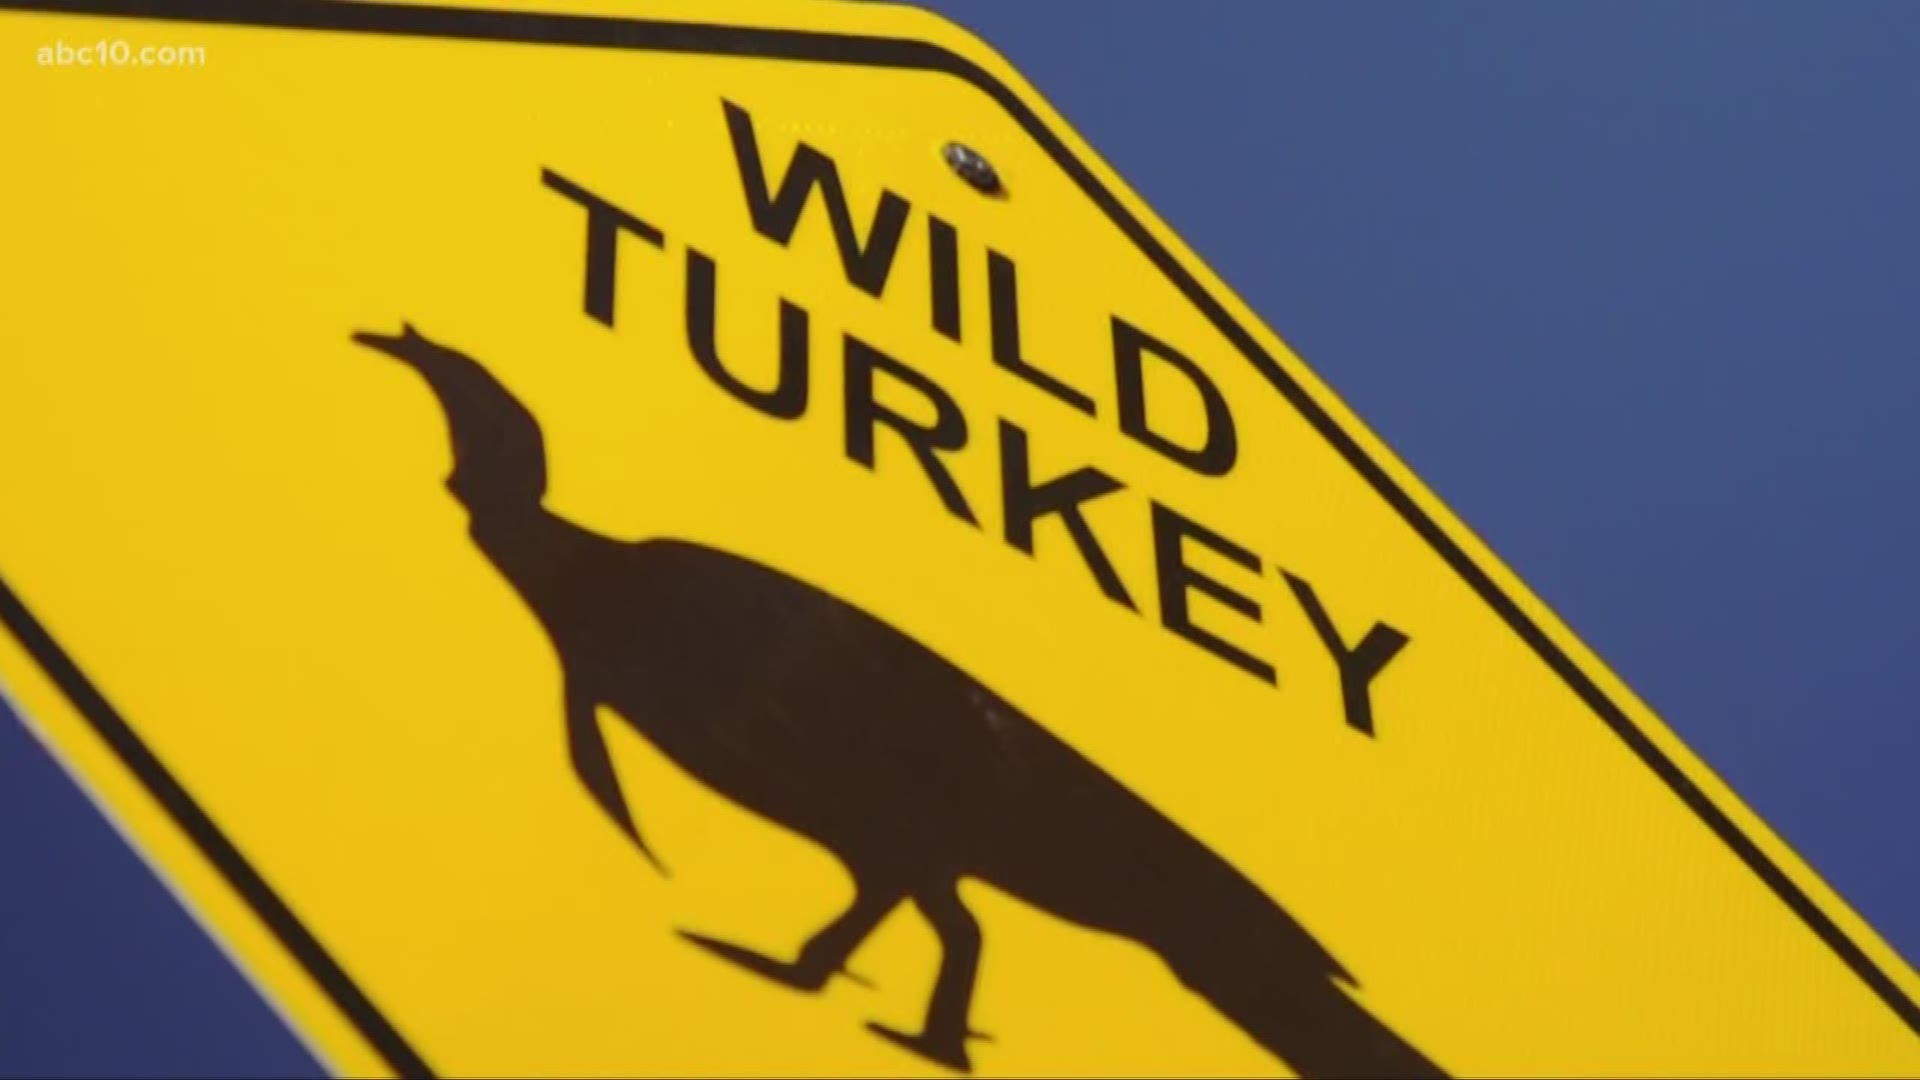 Sacramento girl loves turkeys and got city to put up signs for wild turkeys crossing (October 8, 2018)